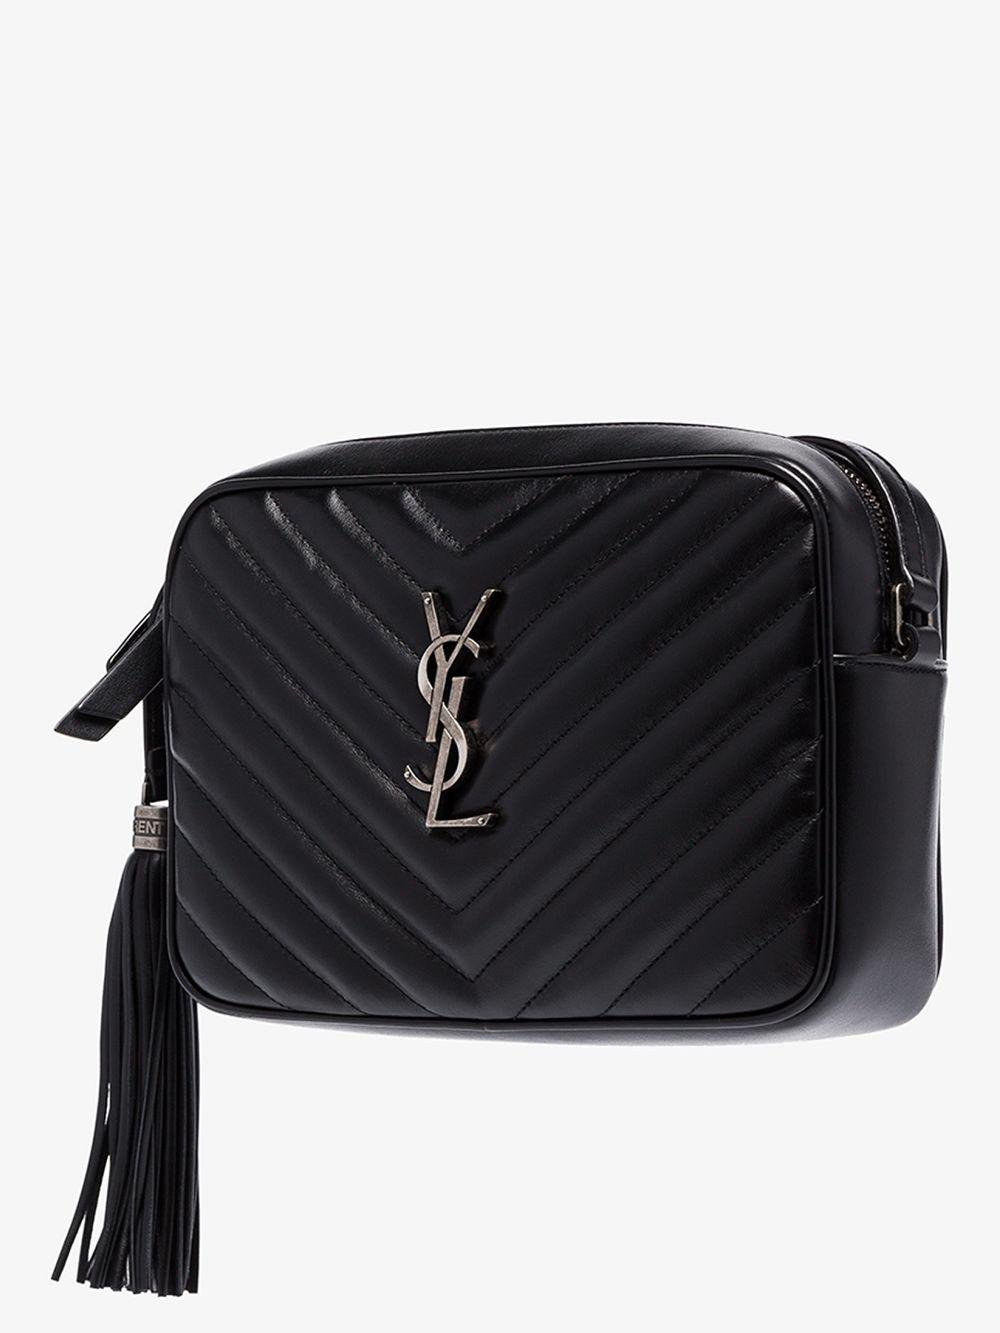 Lou Mini leather crossbody bag black #Sponsored #leather, #Mini